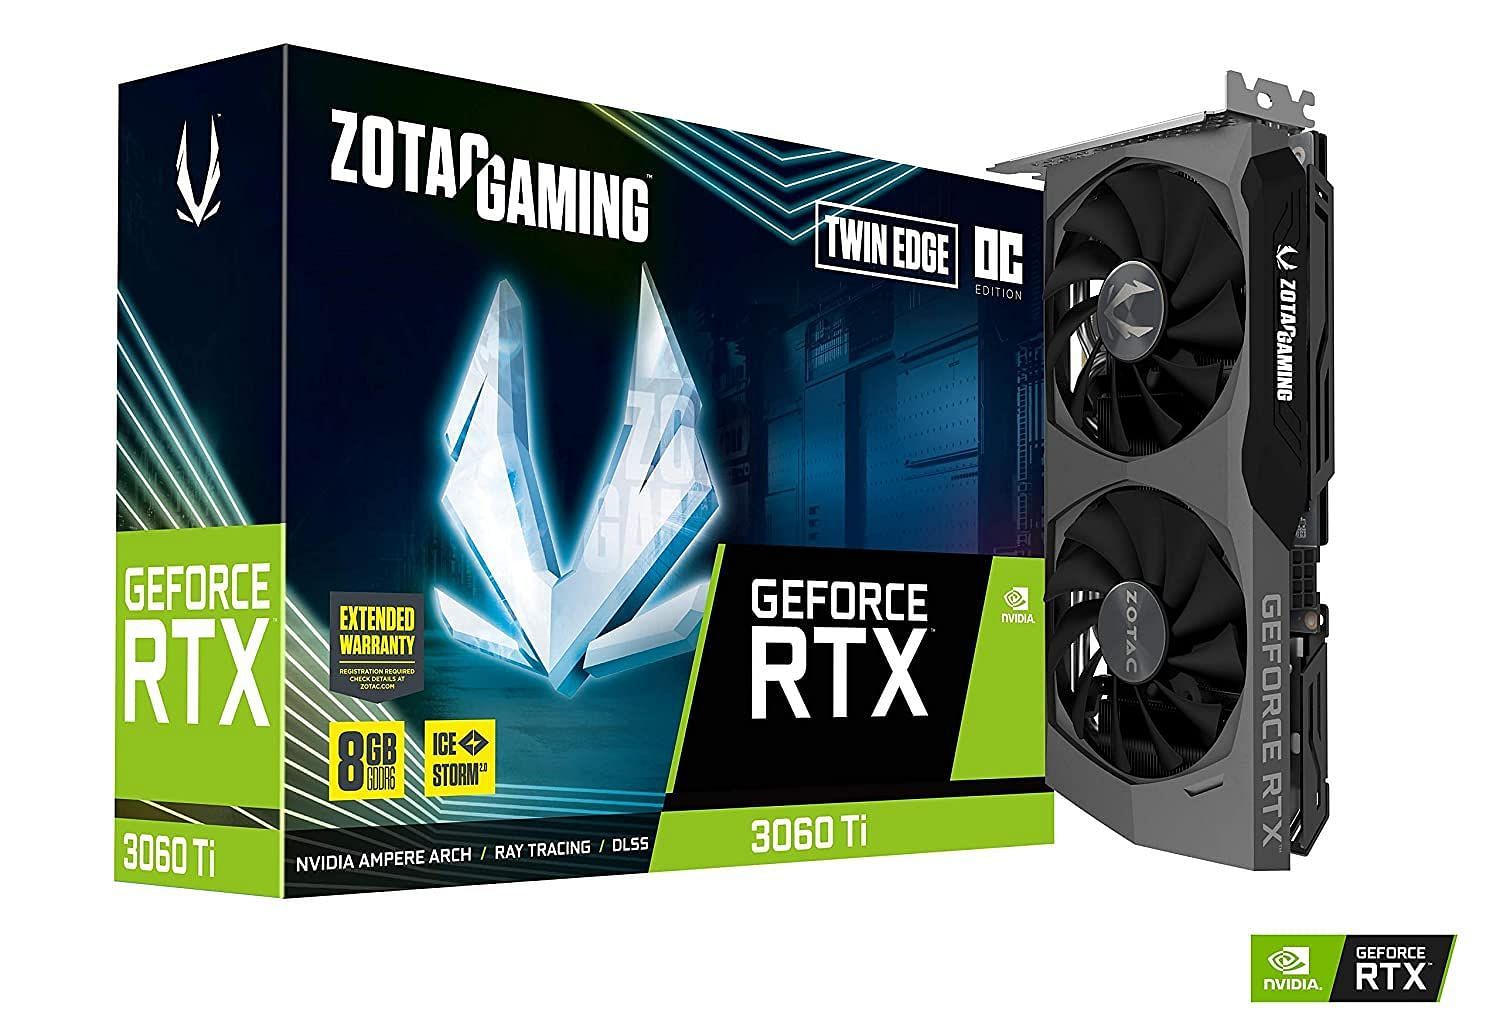 The Zotac Gaming Nvidia GeForce RTX 3060 Ti (Image via Amazon)